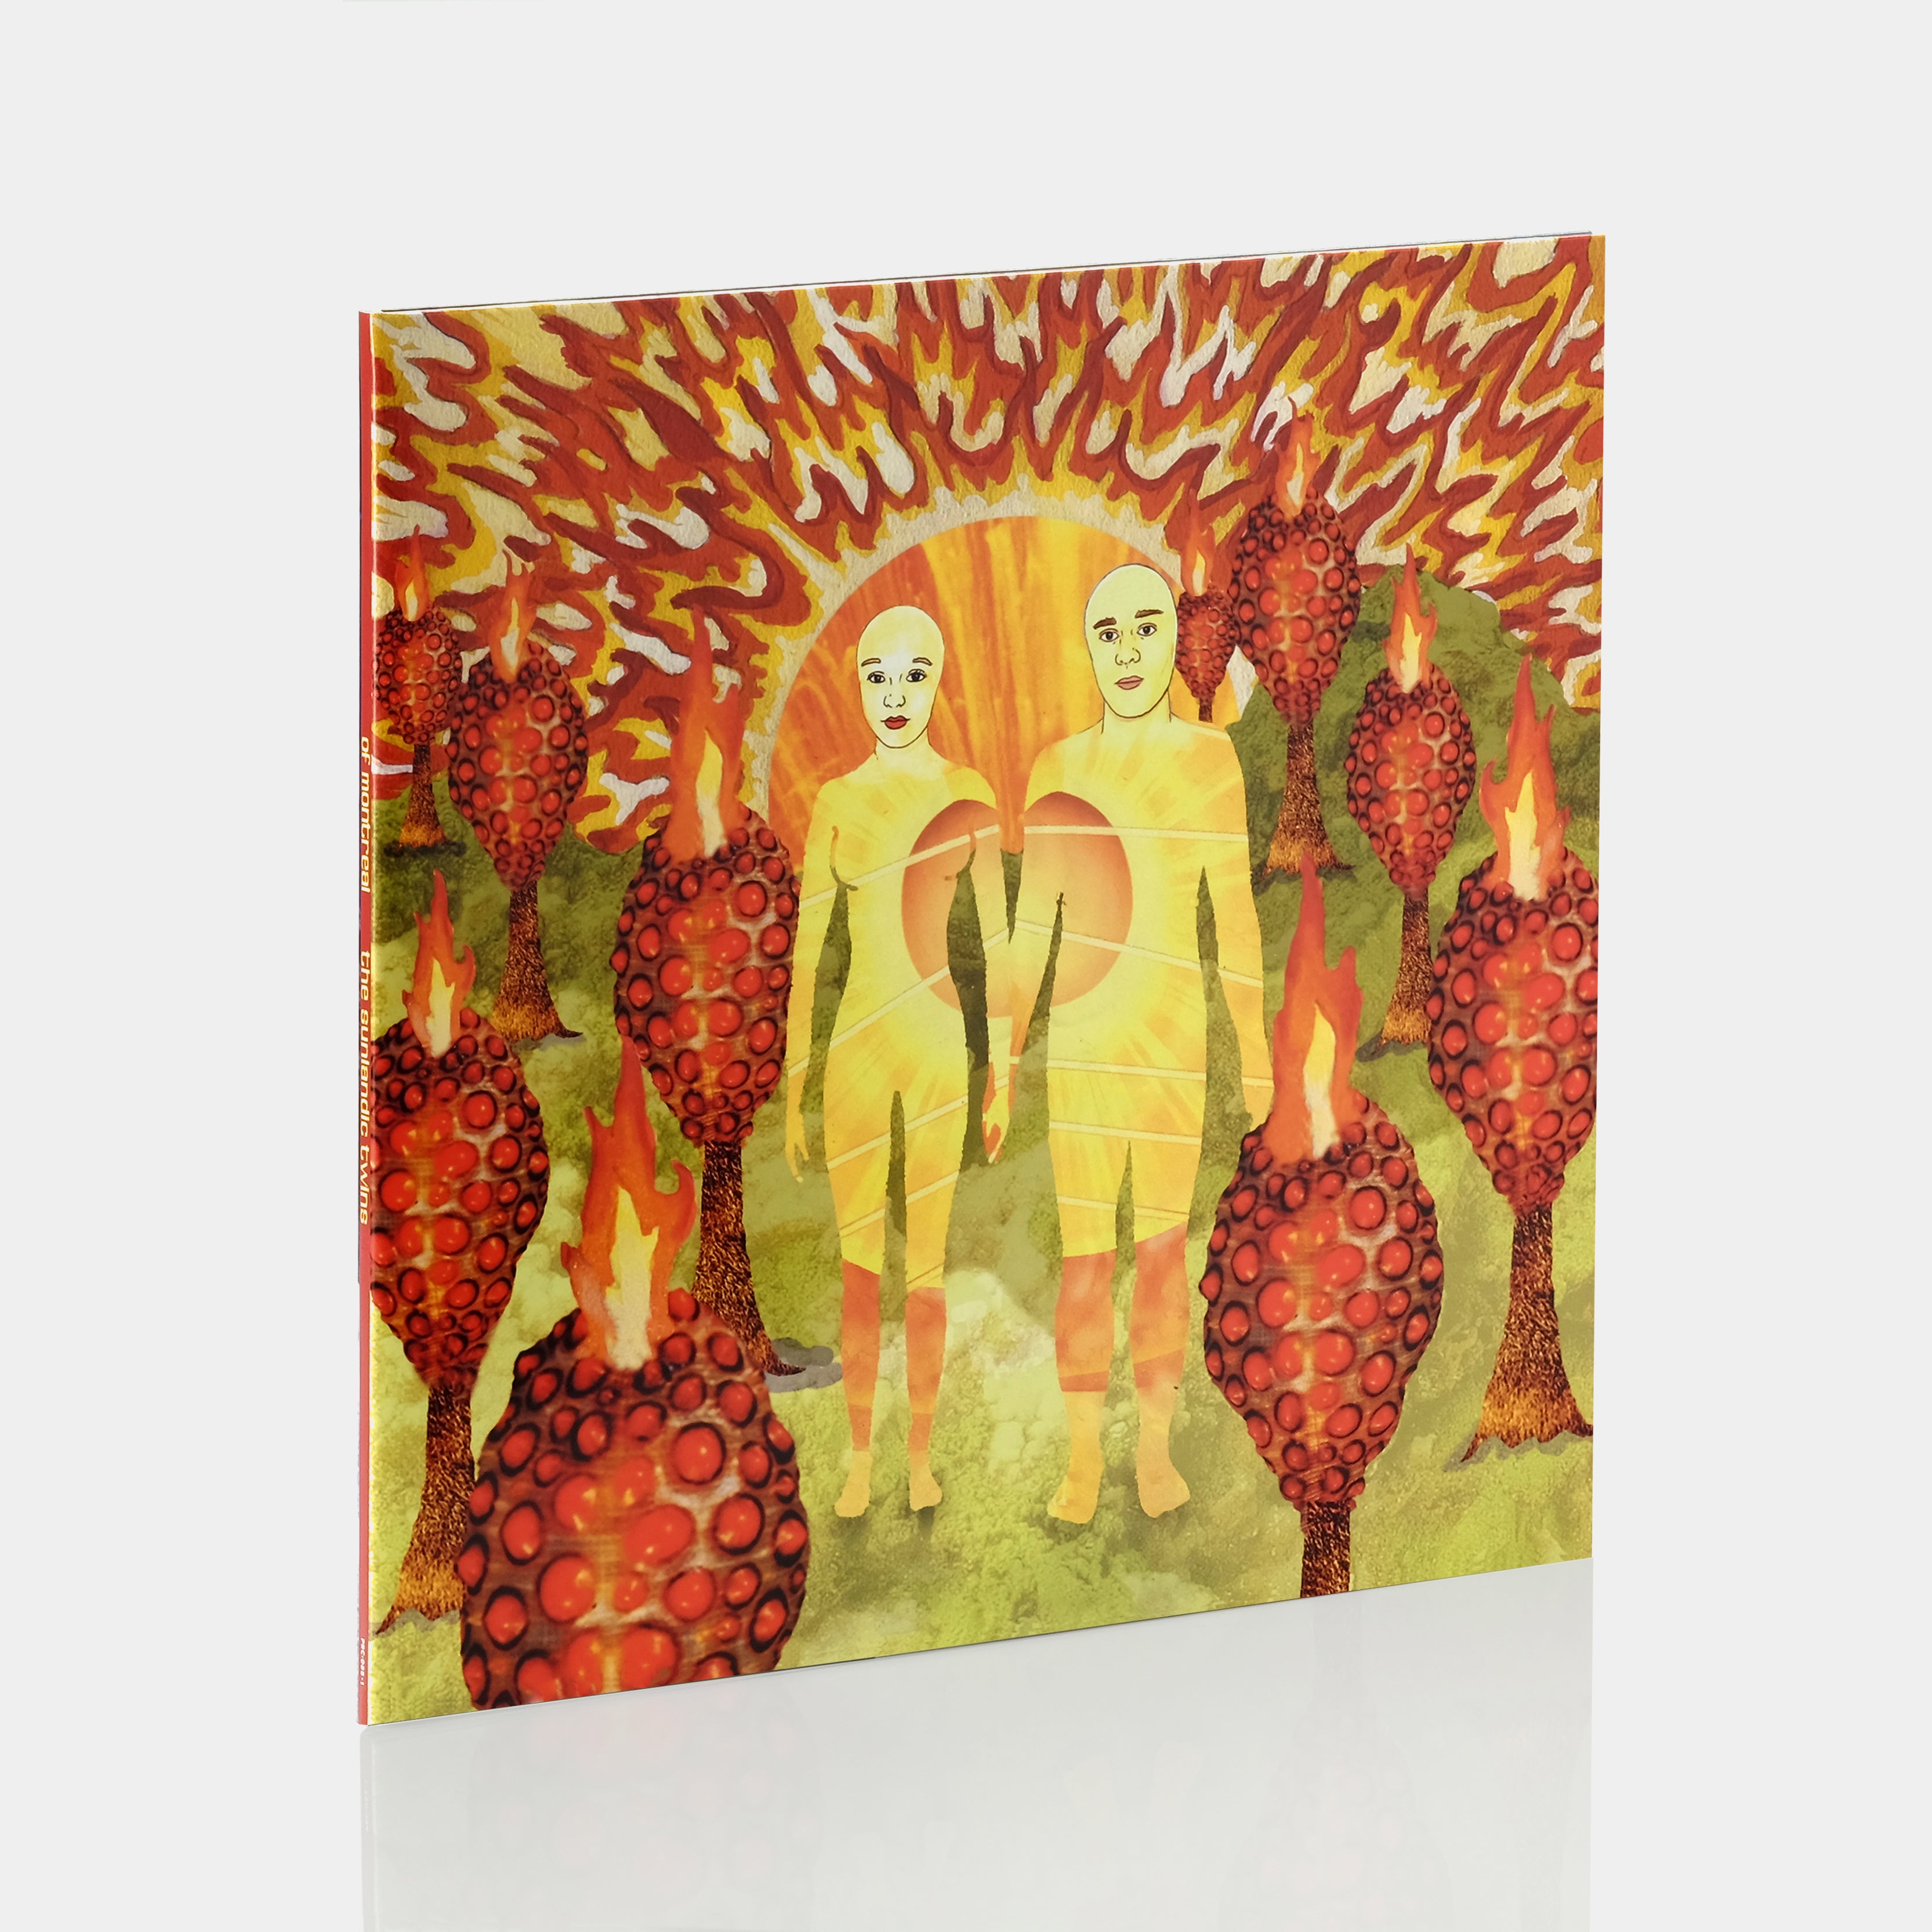 Of Montreal - The Sunlandic Twins 2xLP Red Vinyl Record